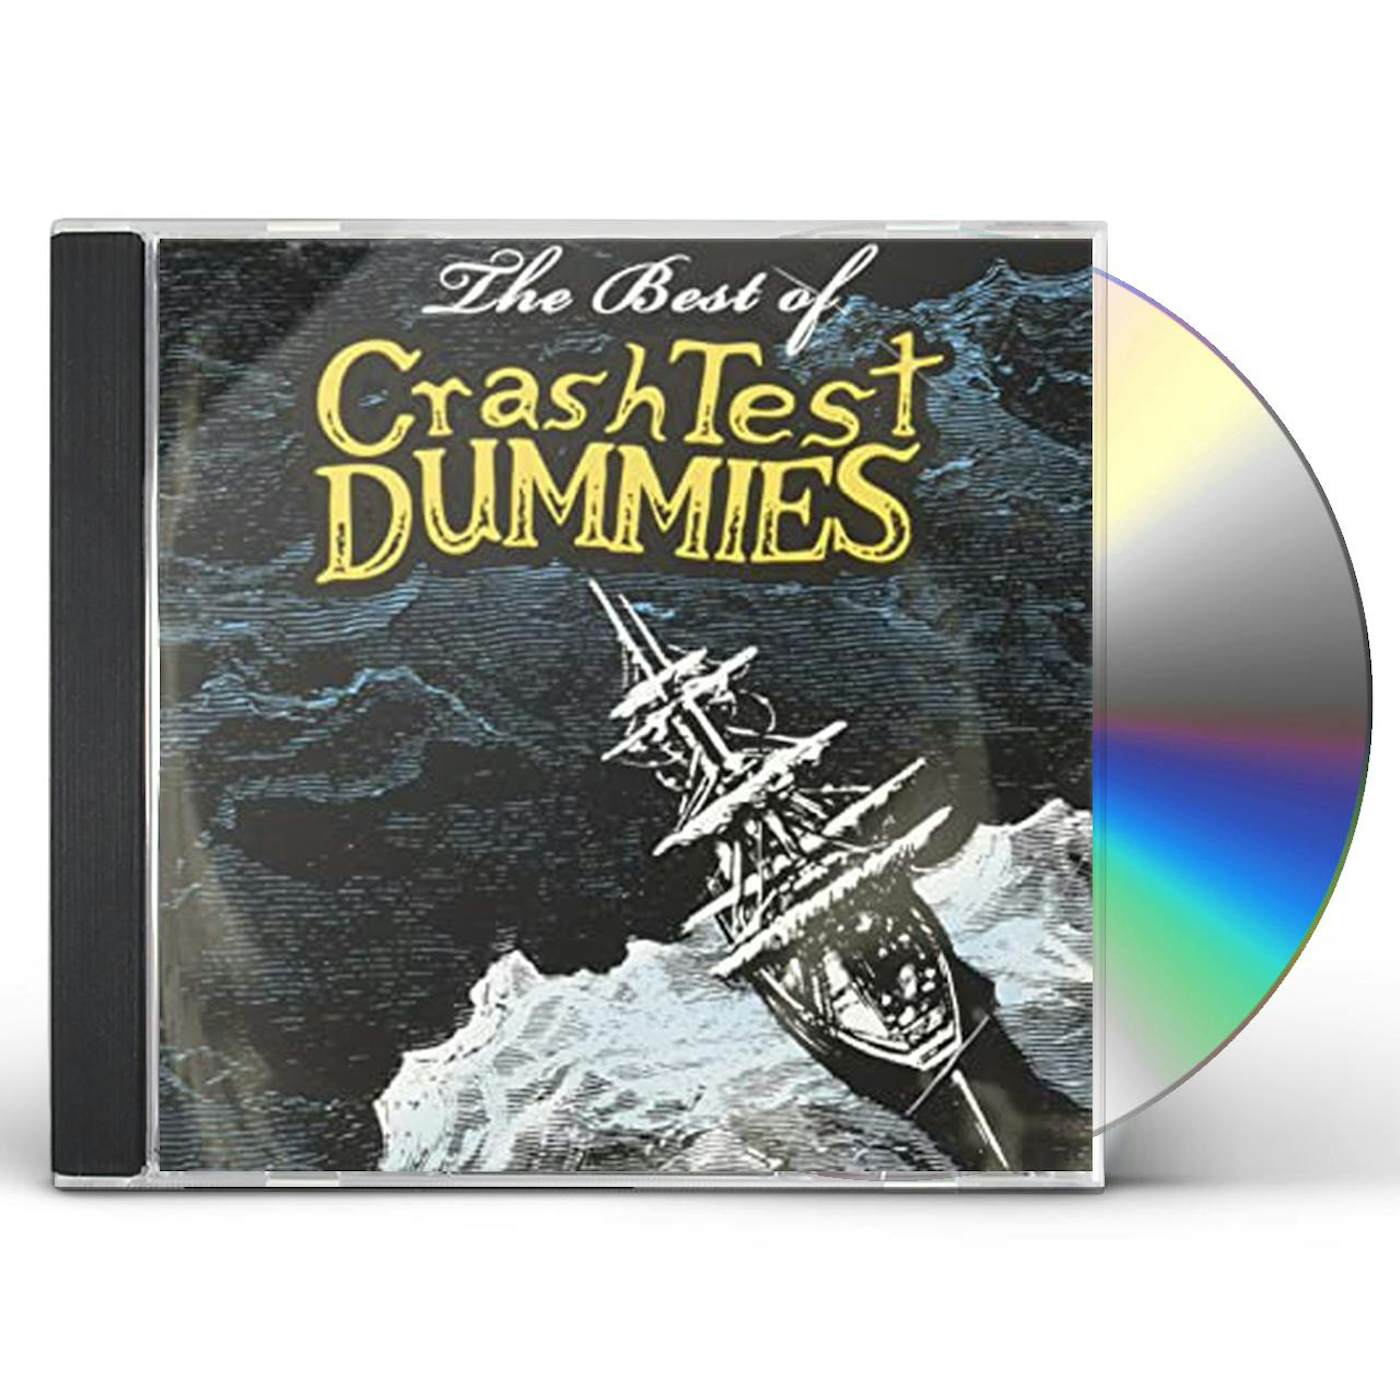 BEST OF CRASH TEST DUMMIES CD